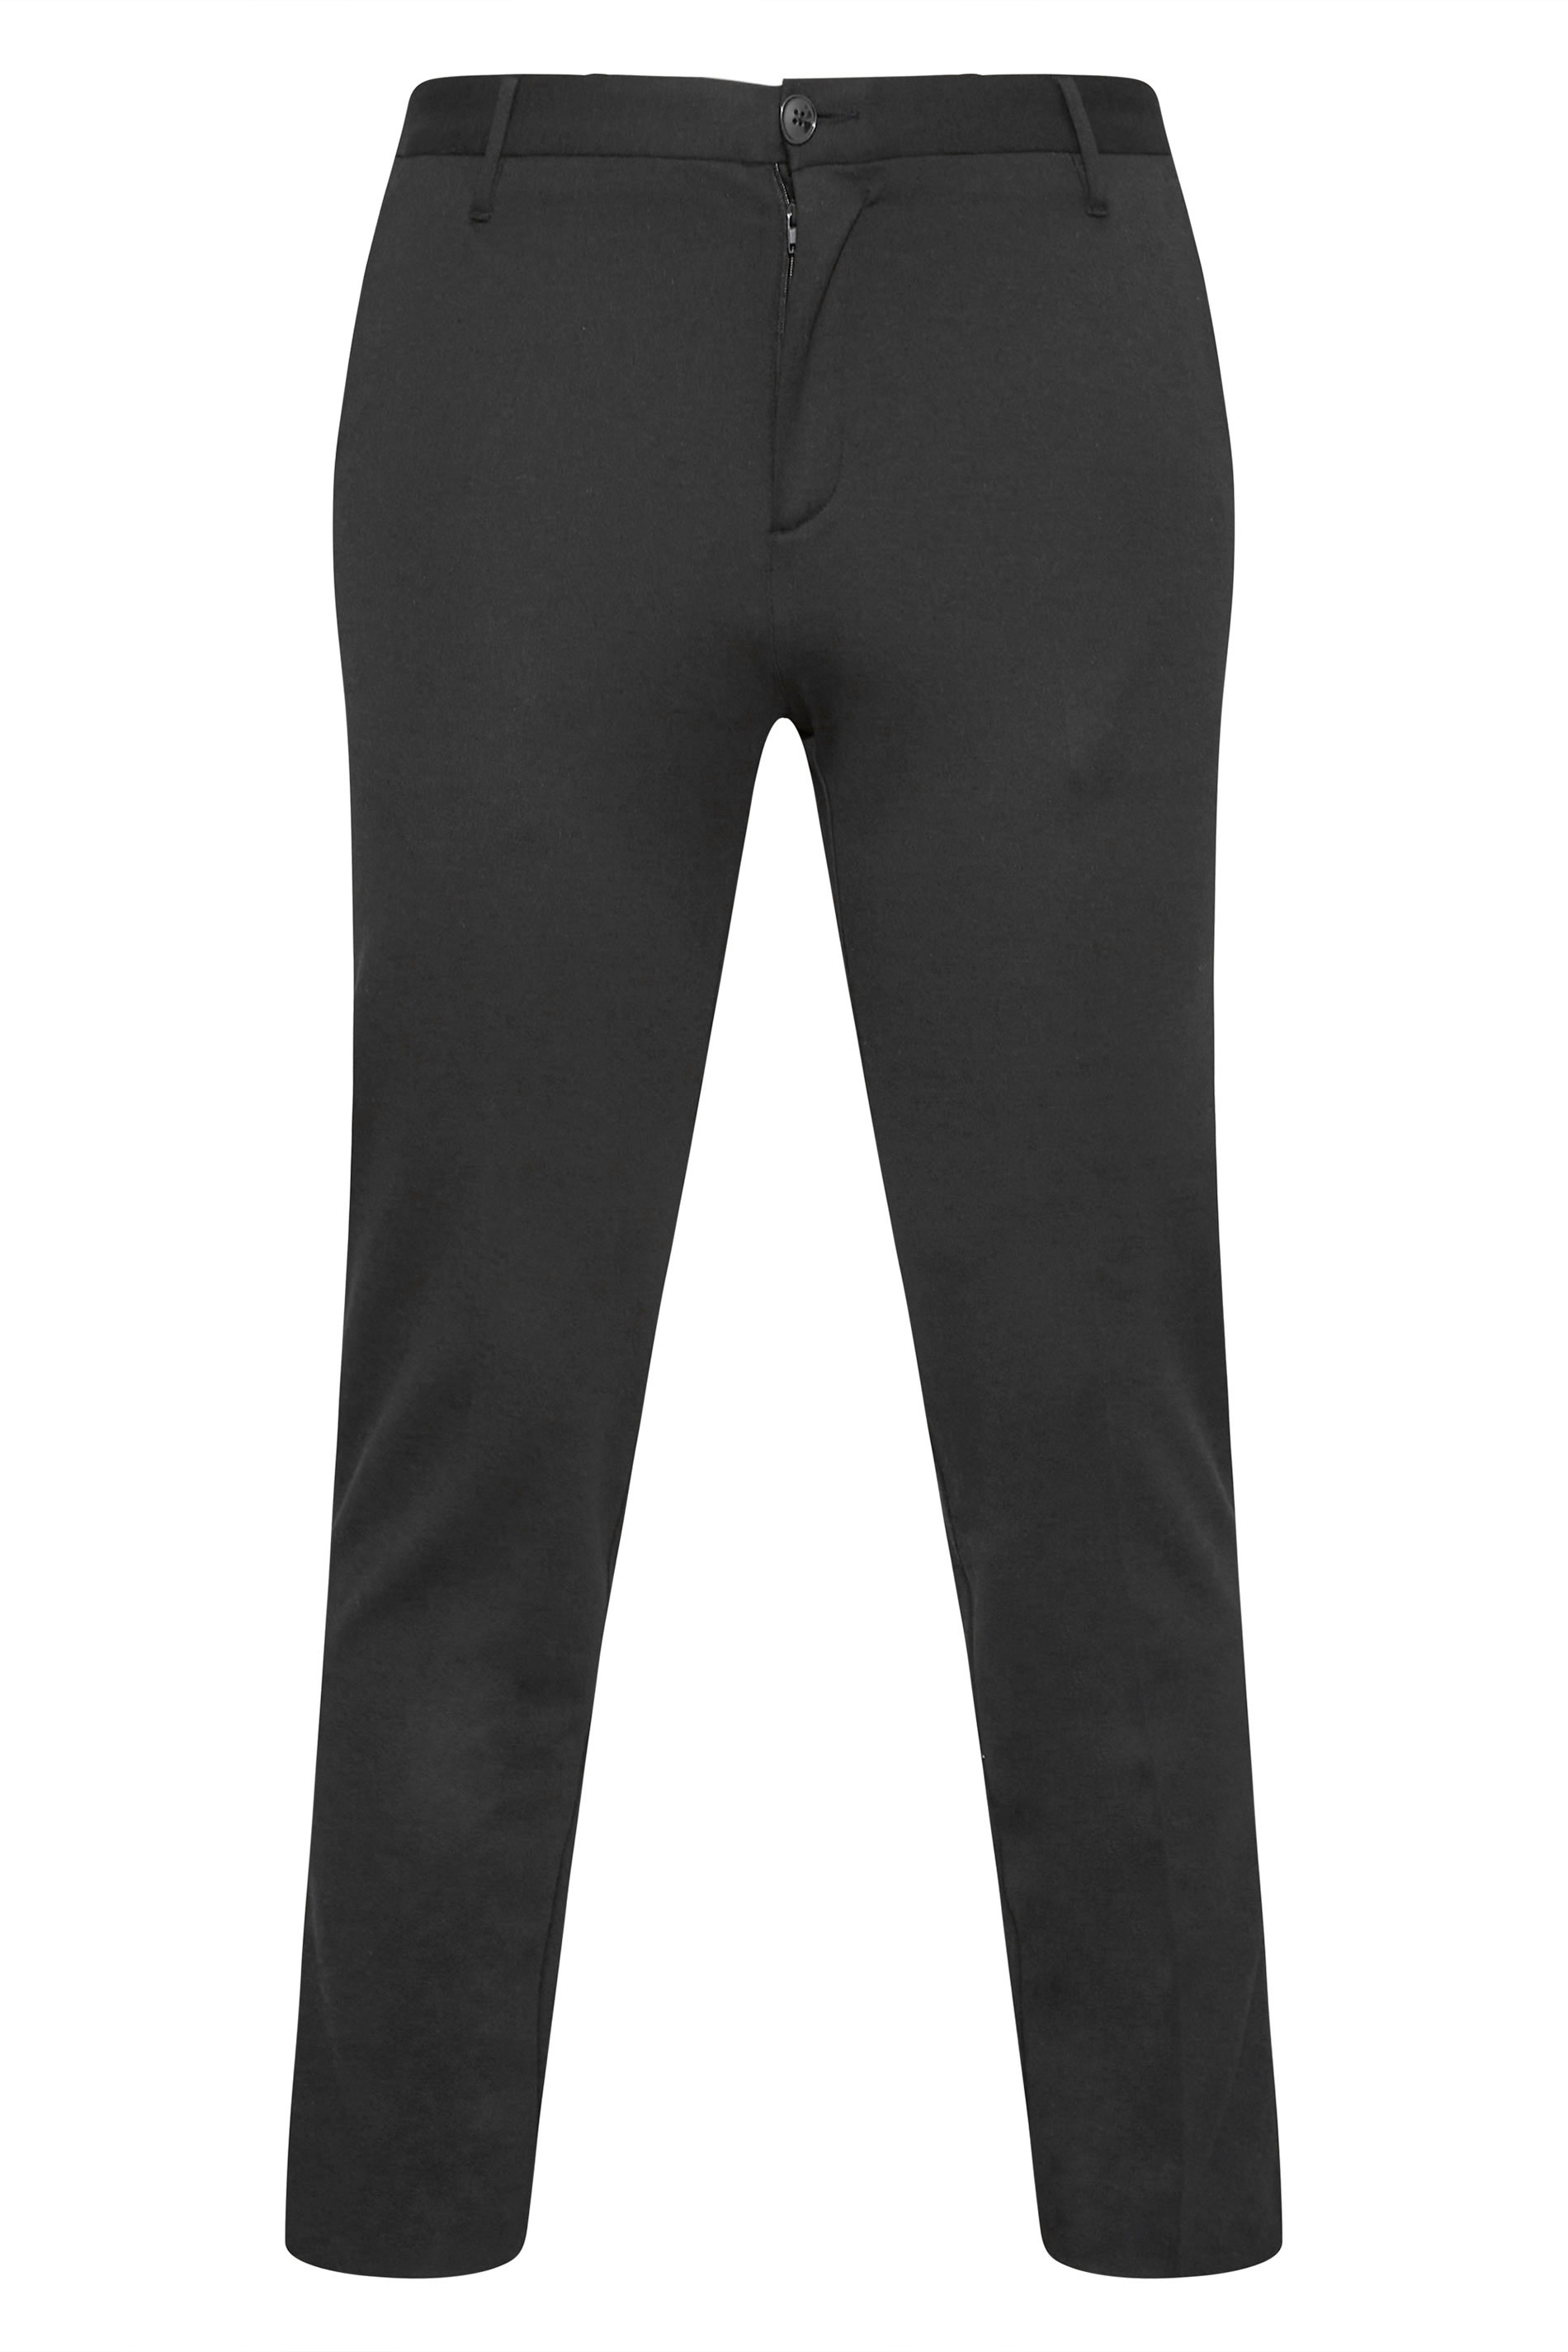 BadRhino Big & Tall Black Stretch Trousers 1